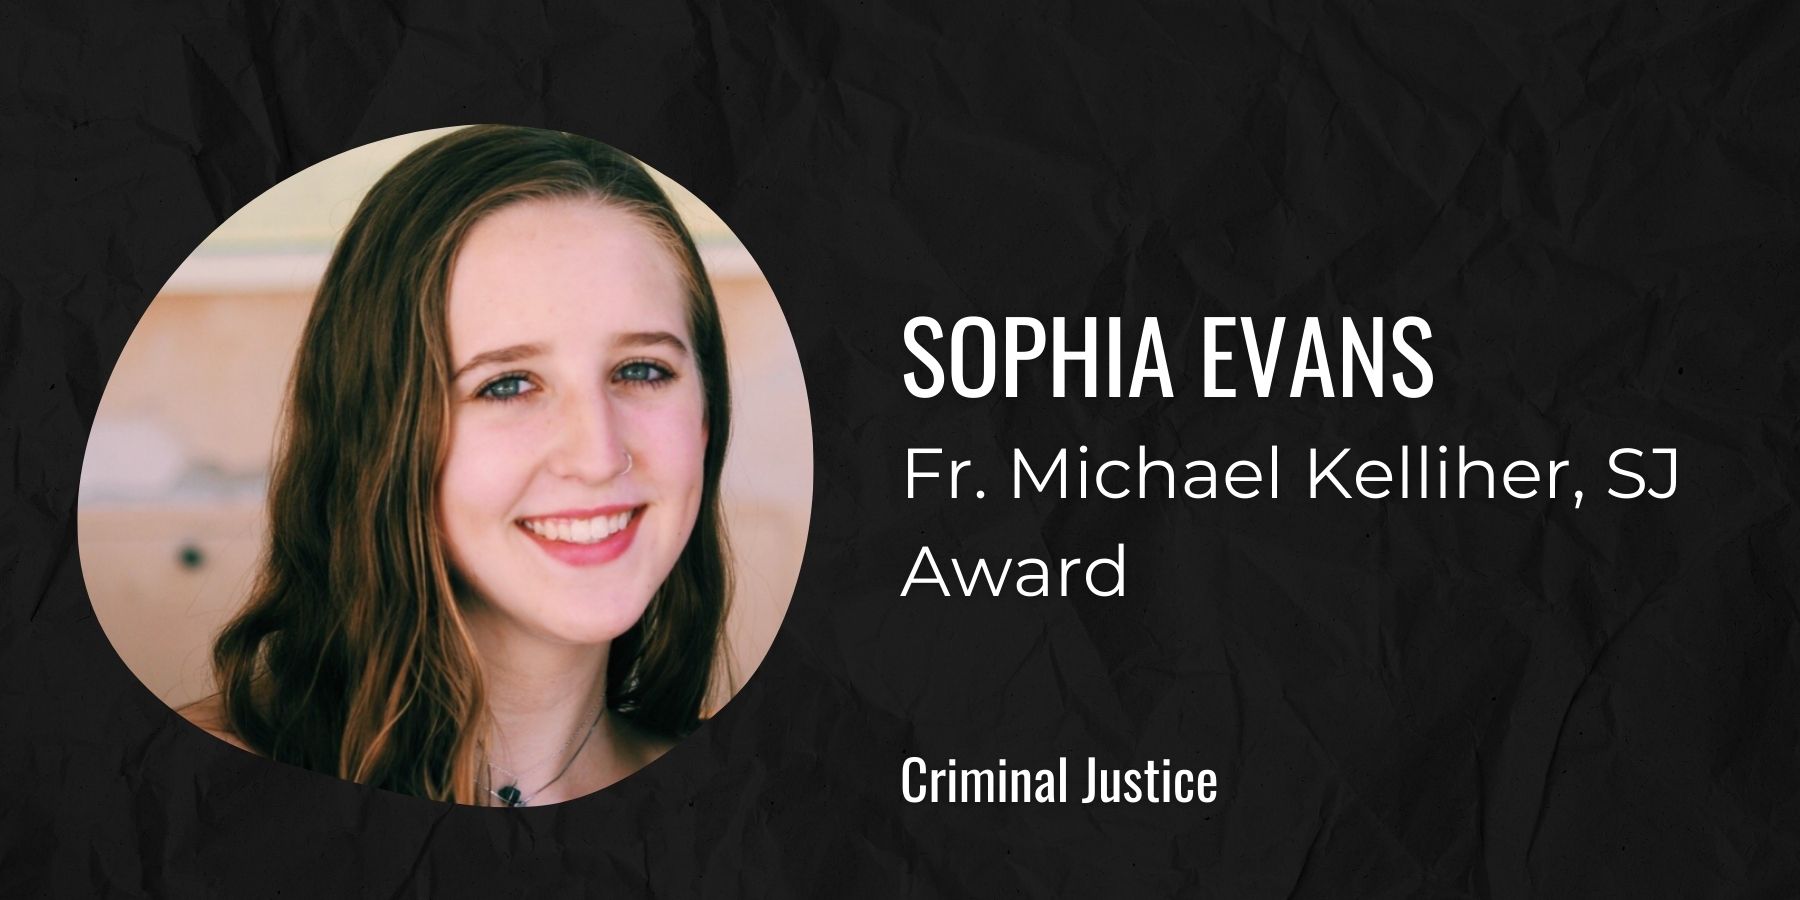 Image of Sophia Evans with text Fr. Michael Kelliher, SJ Award, Criminal Justice
